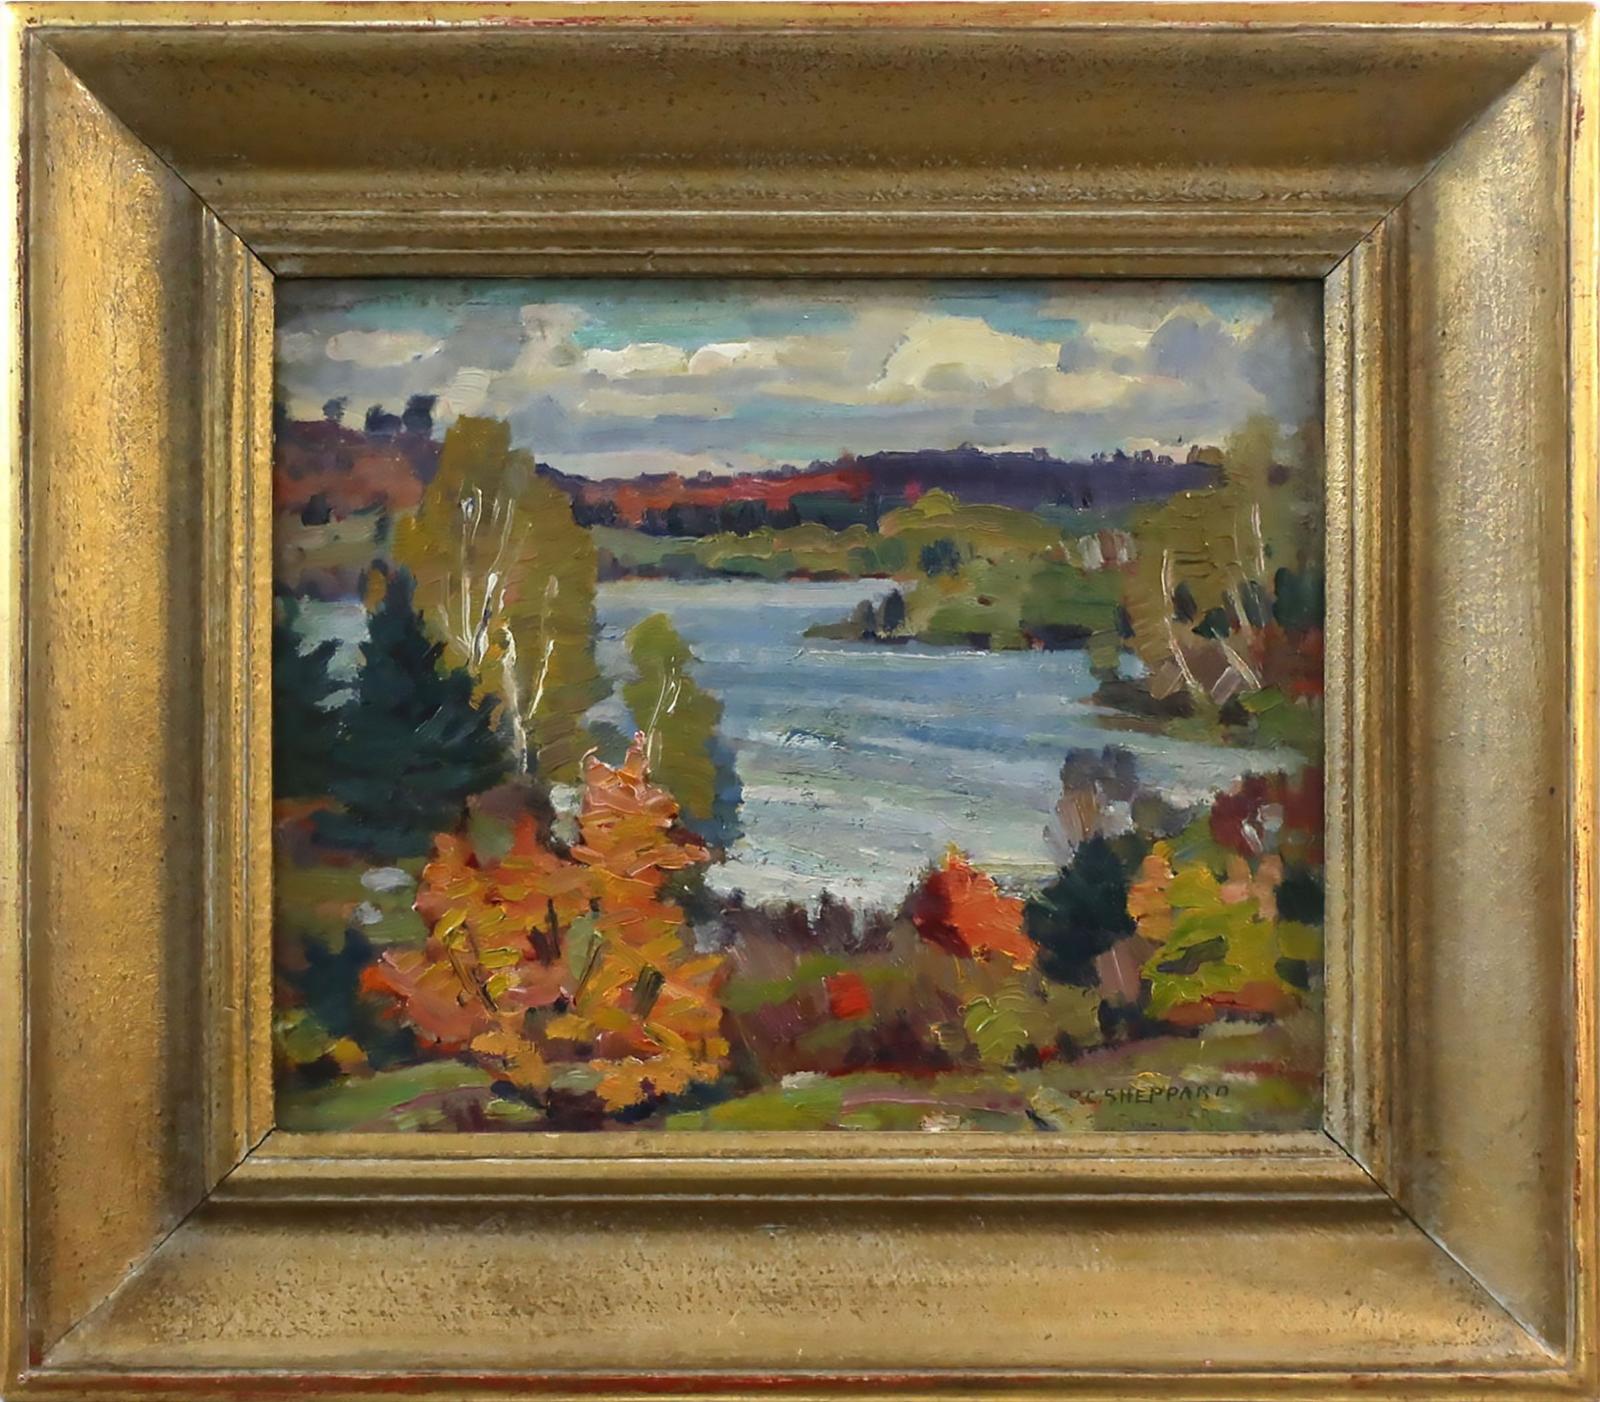 Peter Clapham (P.C.) Sheppard (1882-1965) - Untitled (Fall Lake Scene)